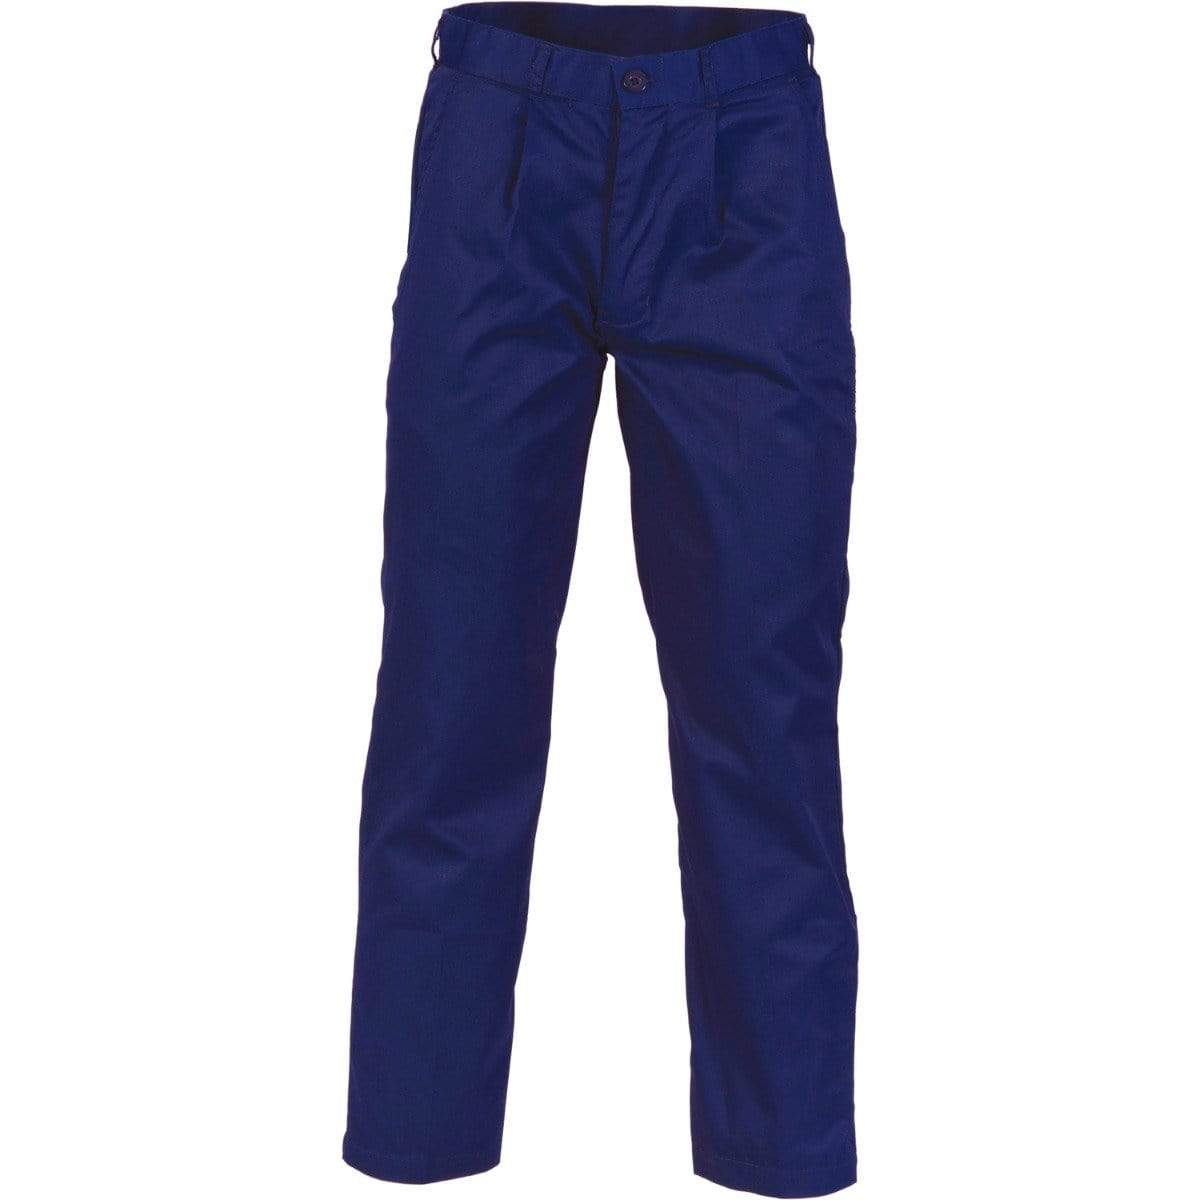 Dnc Workwear Polyester Cotton Pleat Front Work Pants - 3315 Work Wear DNC Workwear Navy 77R 